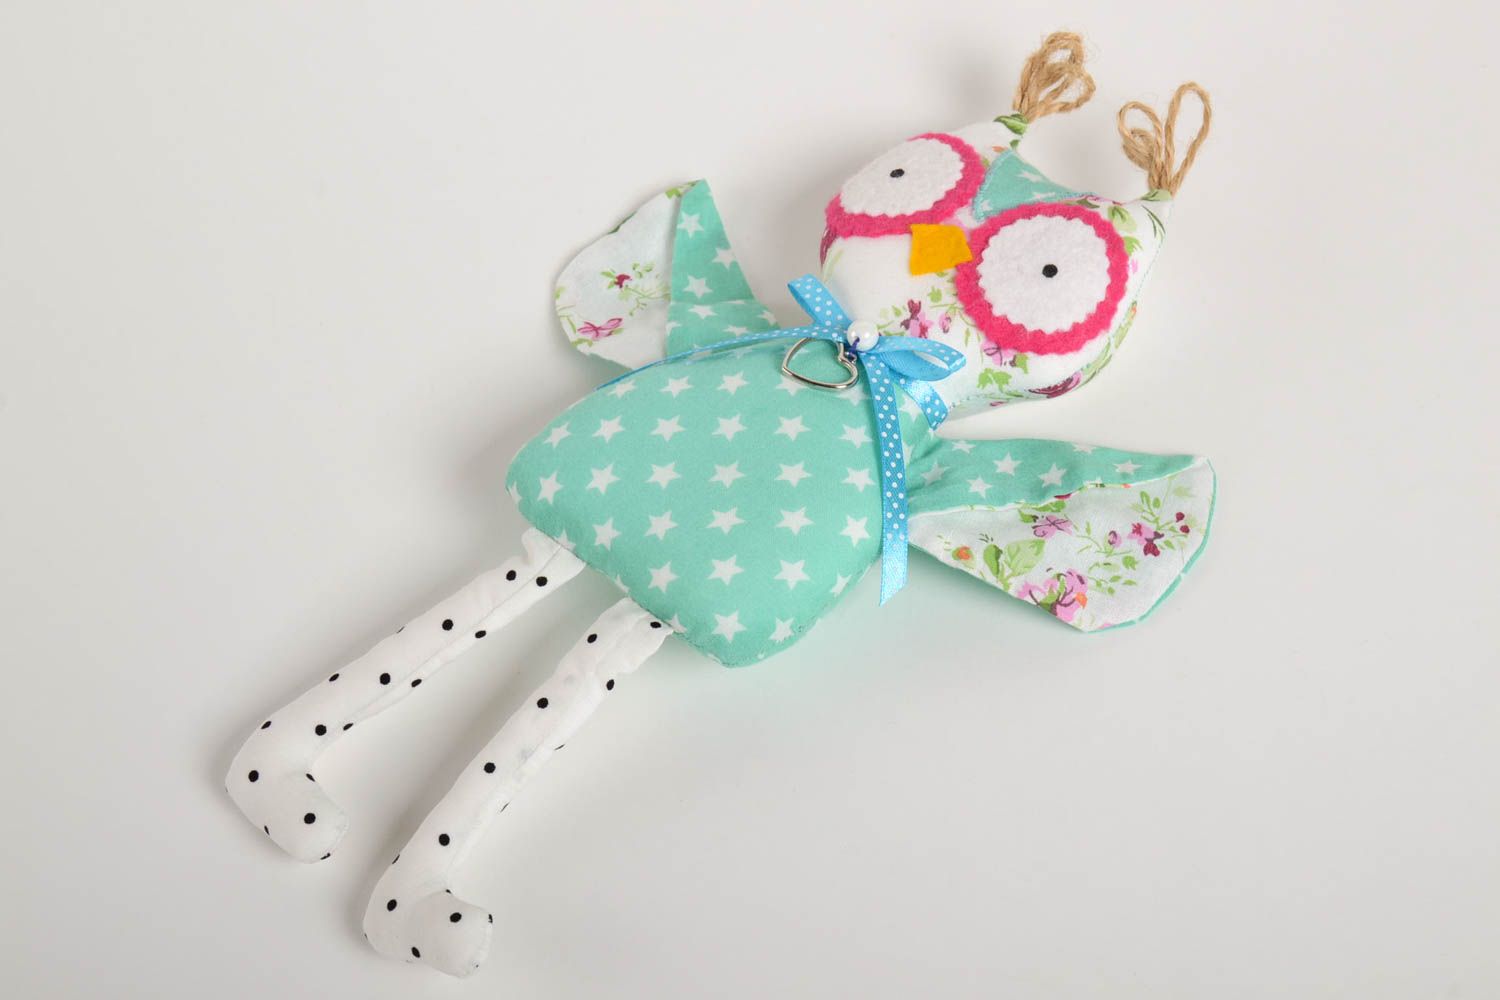 Stylish handmade soft toy rag doll stuffed toy home design decorative use only photo 2